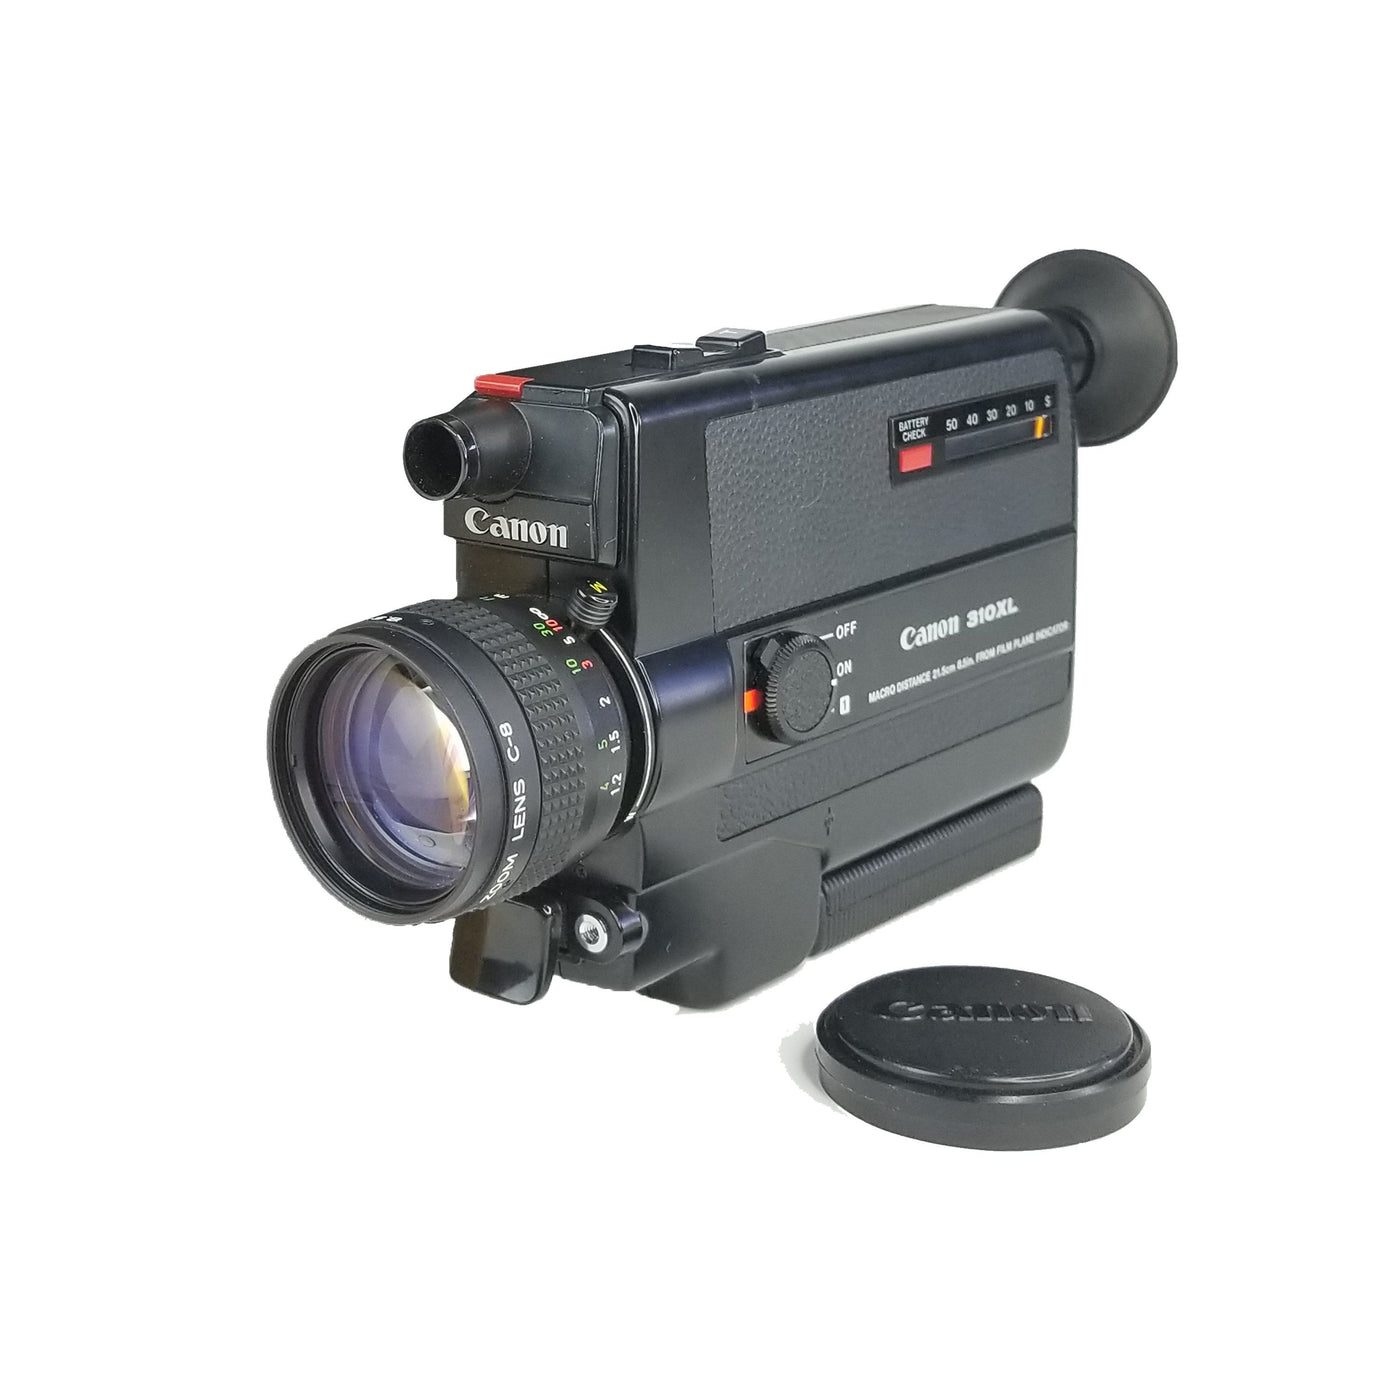 CANON 310XL Super 8 Camera Professionally Serviced and Fully Tested Super 8 Cameras Canon 